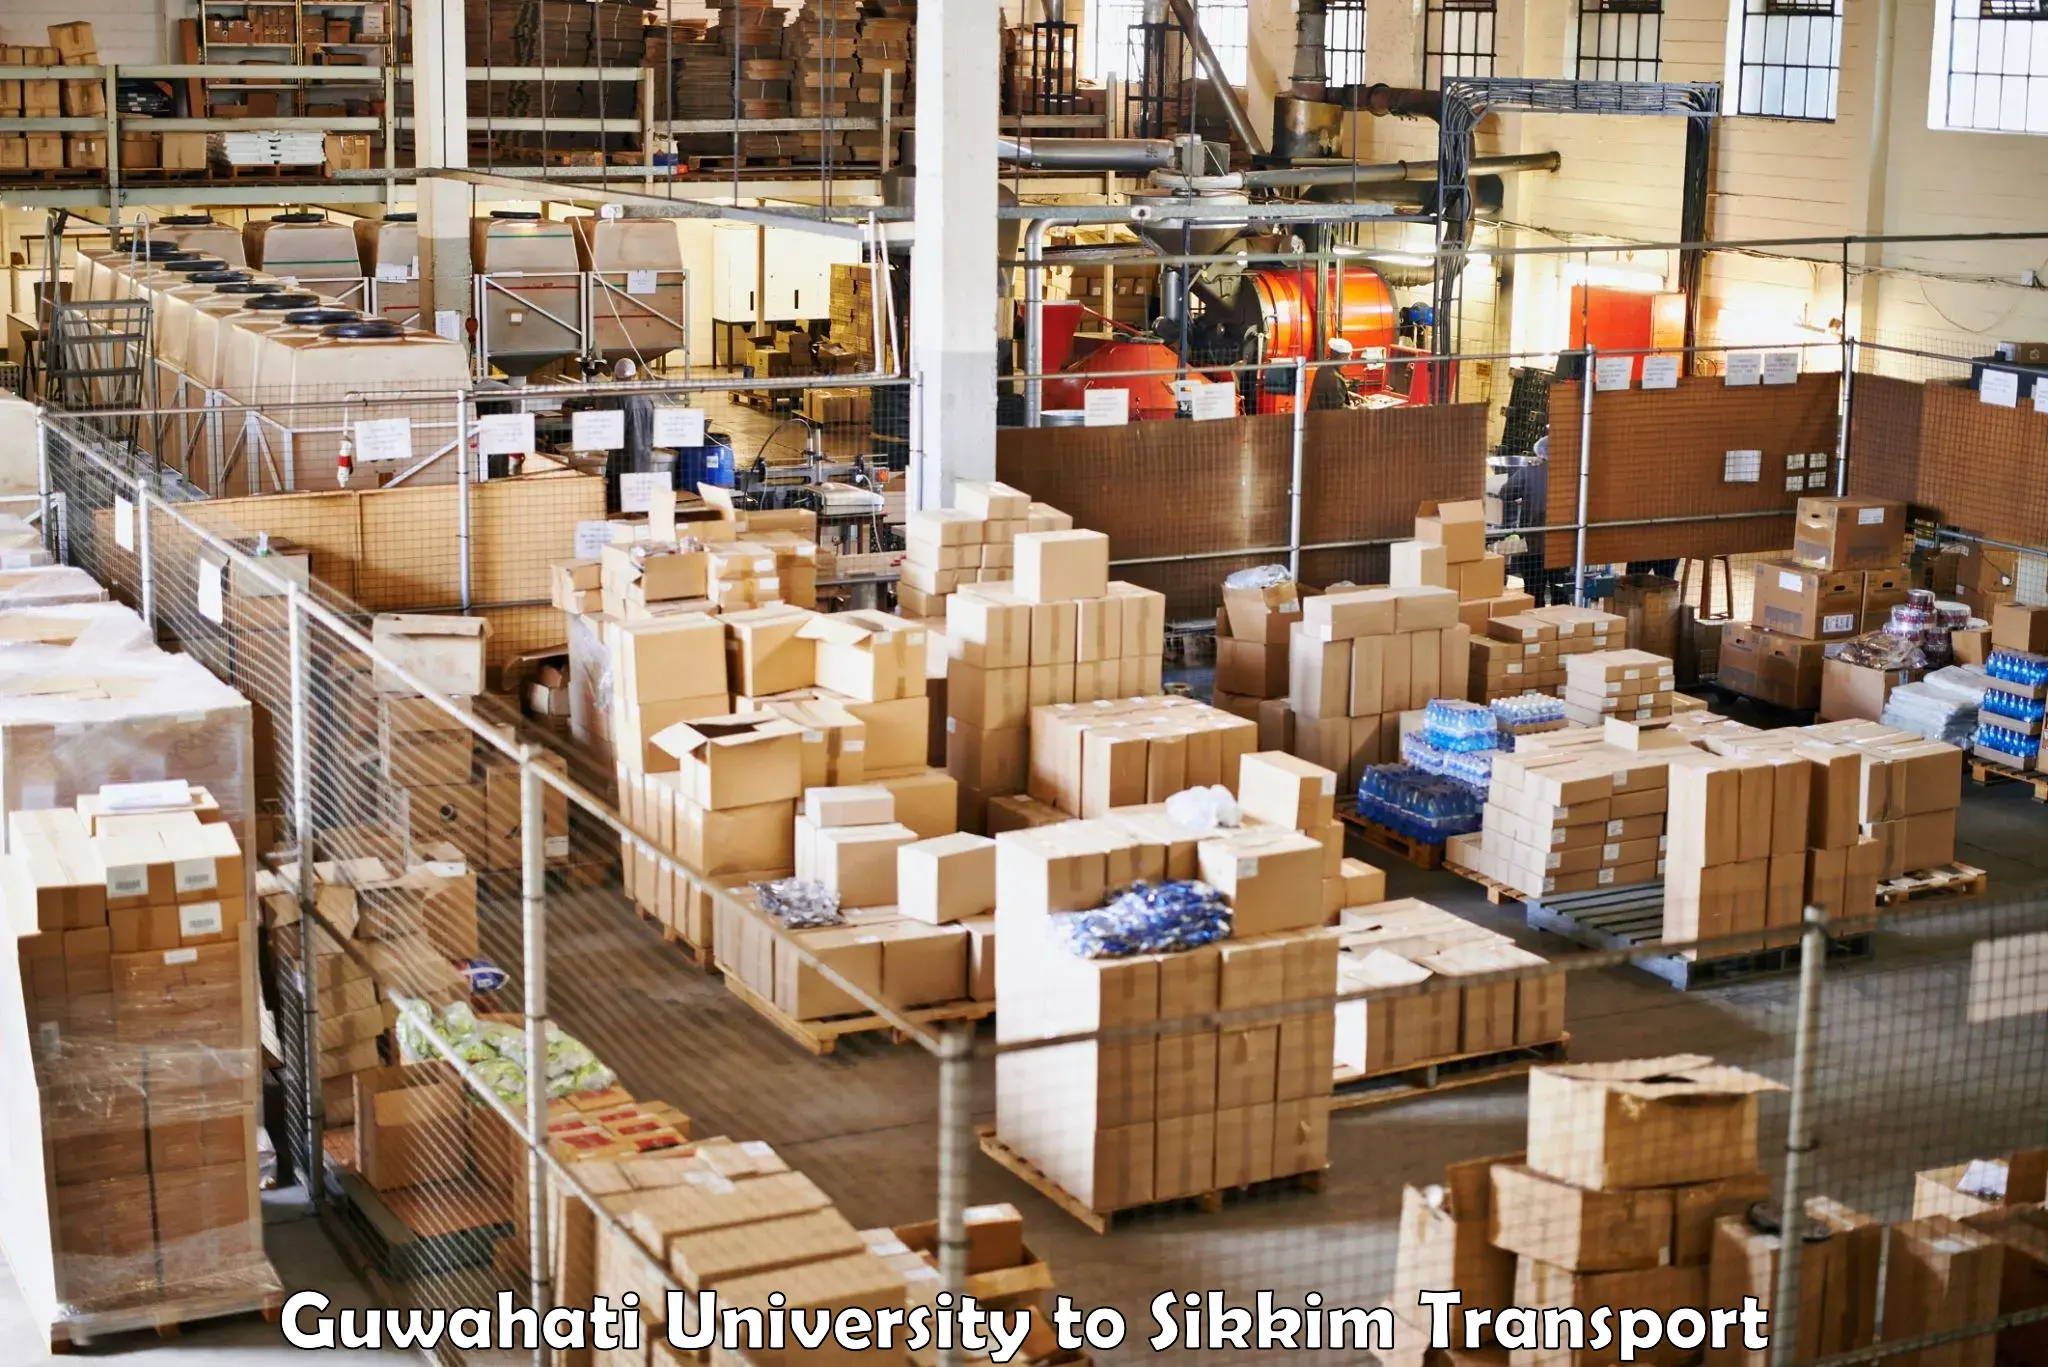 Truck transport companies in India Guwahati University to Pelling